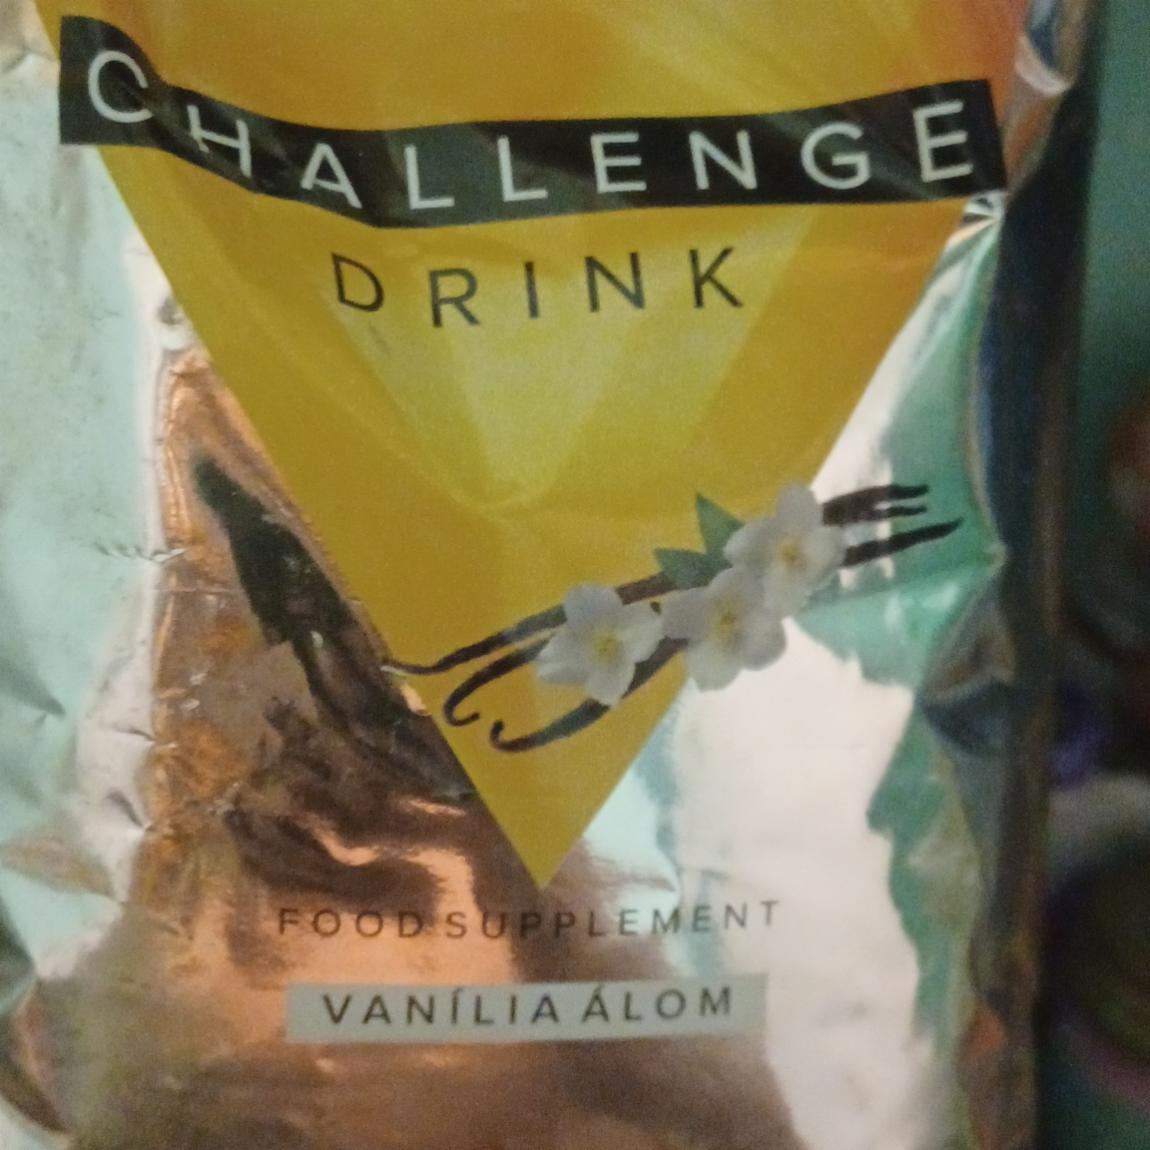 Képek - Challenge Drink Vanília álom